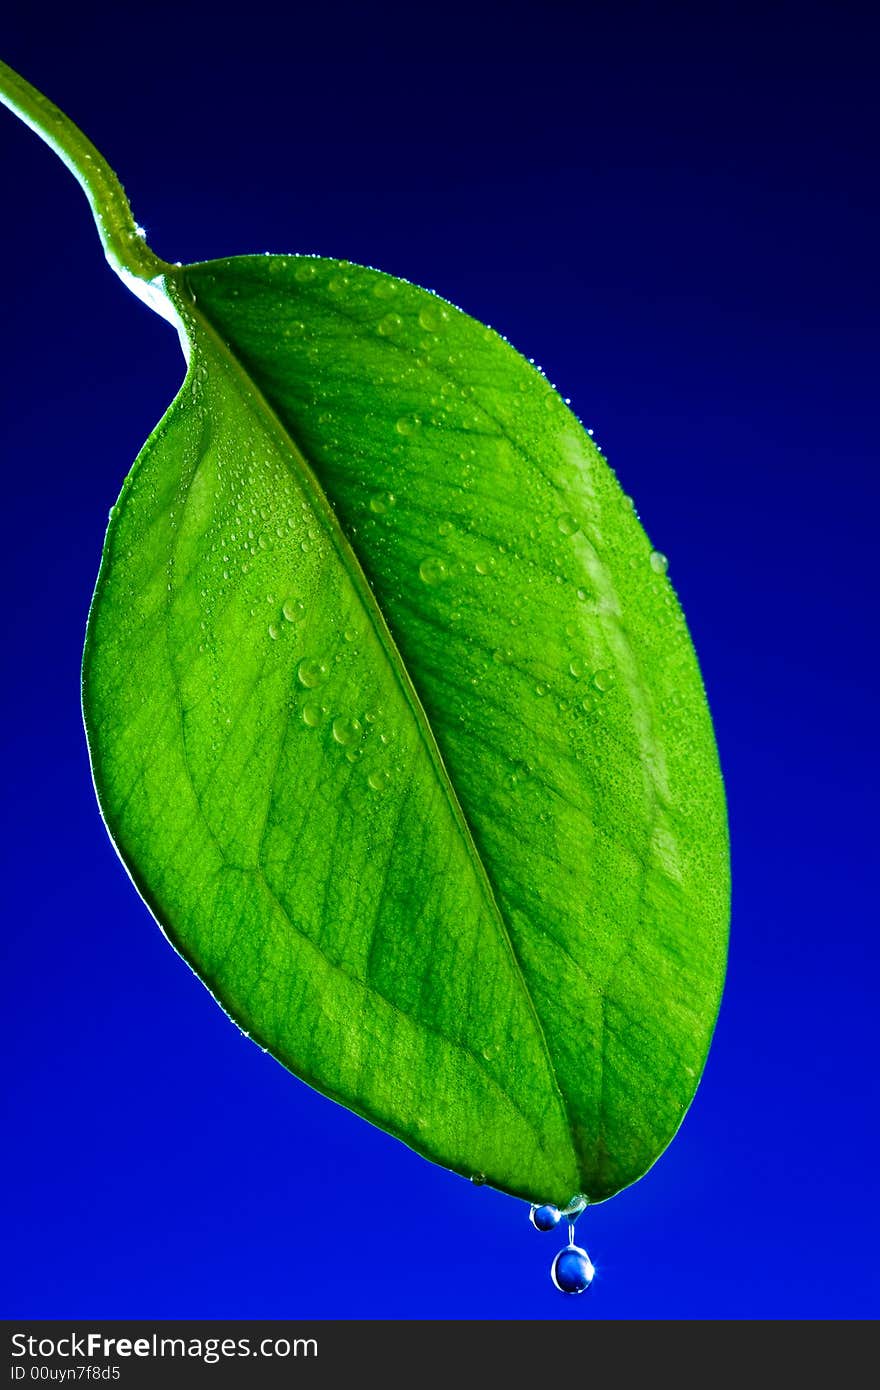 Green leaf close up on a dark blue background. Green leaf close up on a dark blue background